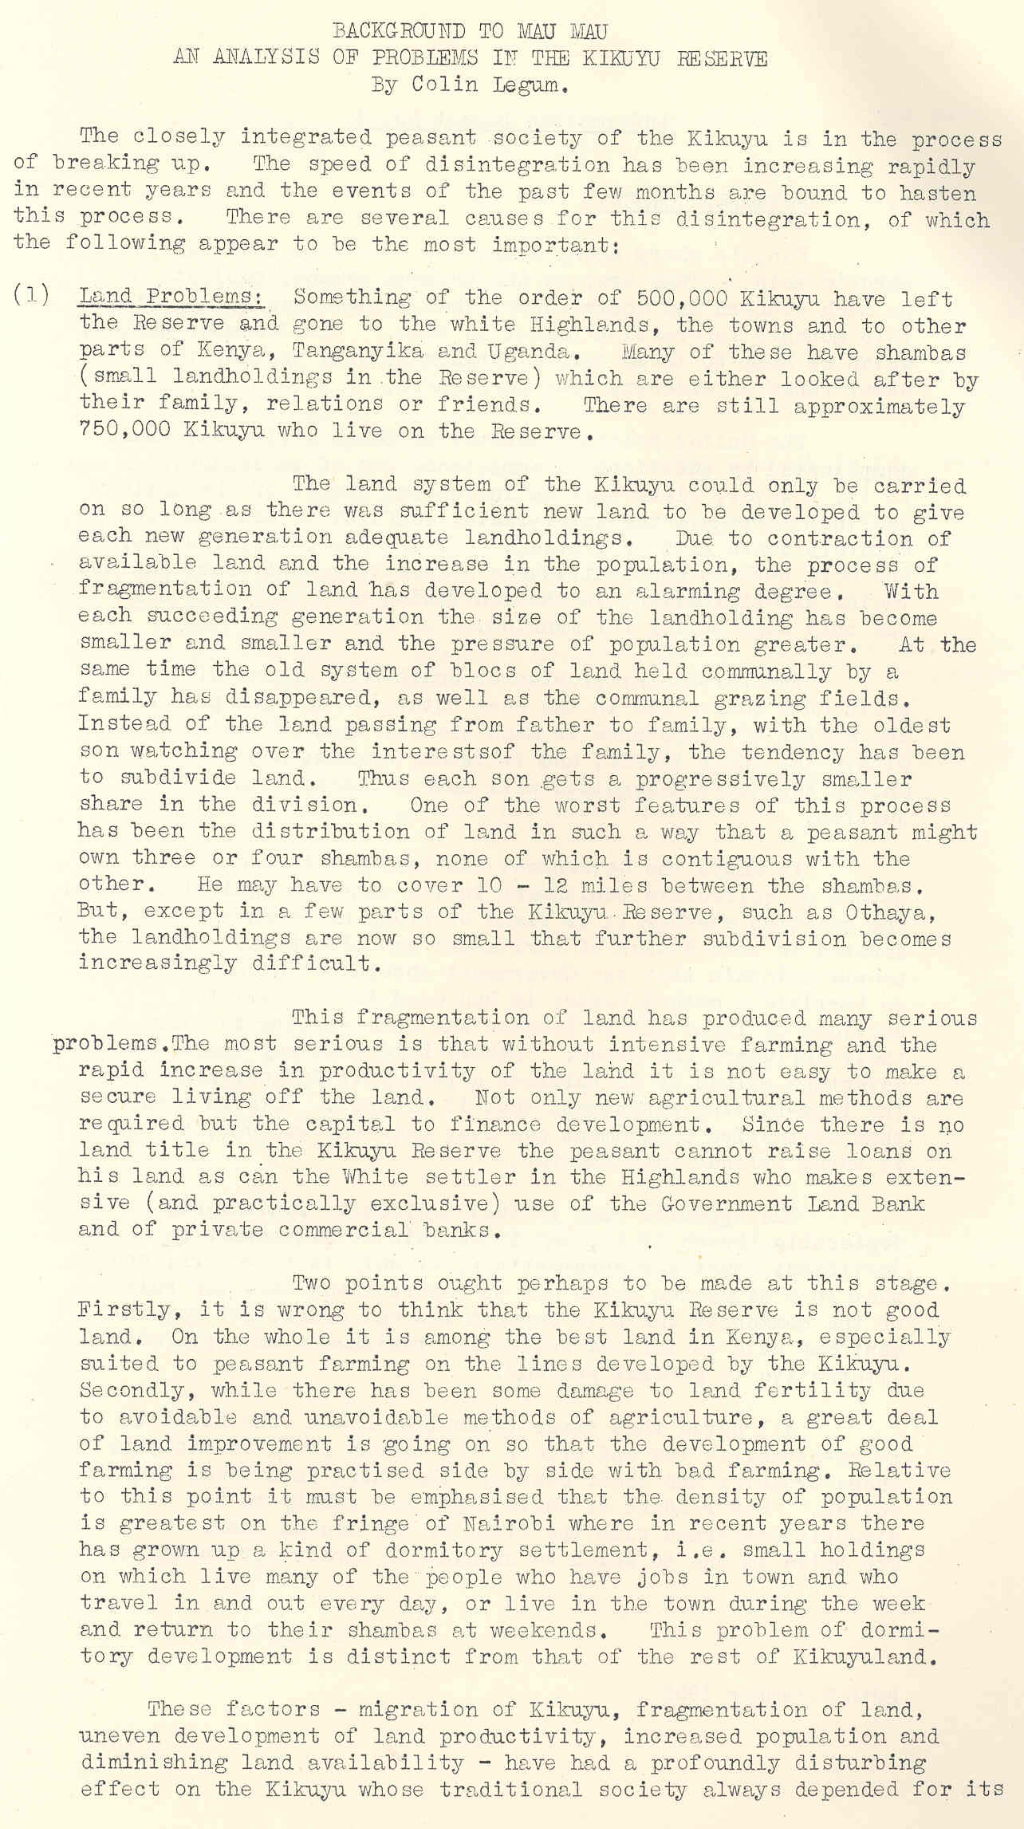 'Background to Mau Mau: an analysis of problems in the Kikuyu Reserve', 1952